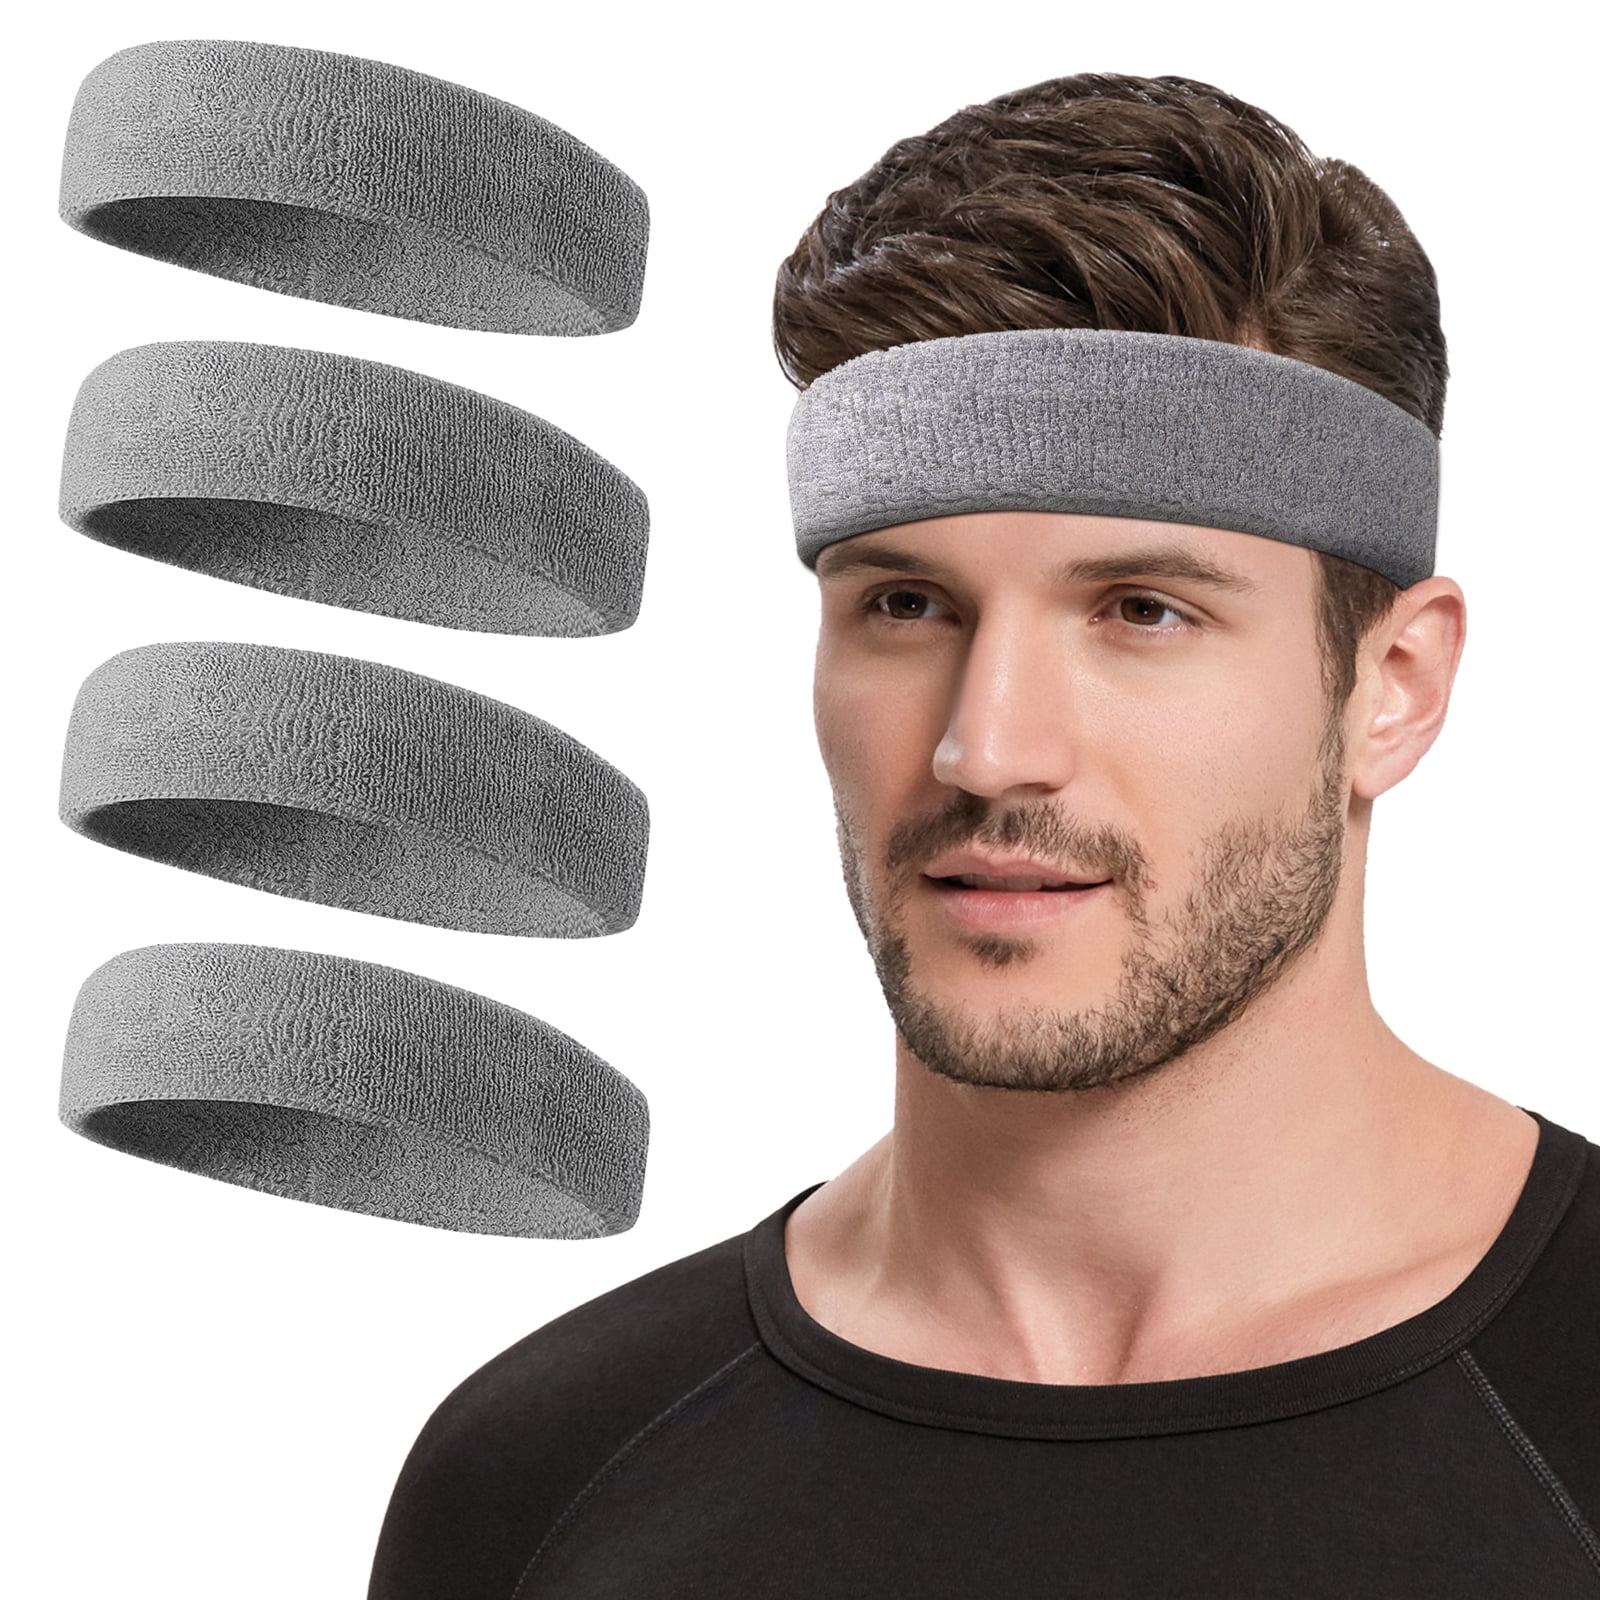 Headbands For Men (4 Pack)- Sweat Band, Sports Mens Headband, Workout  Accessories